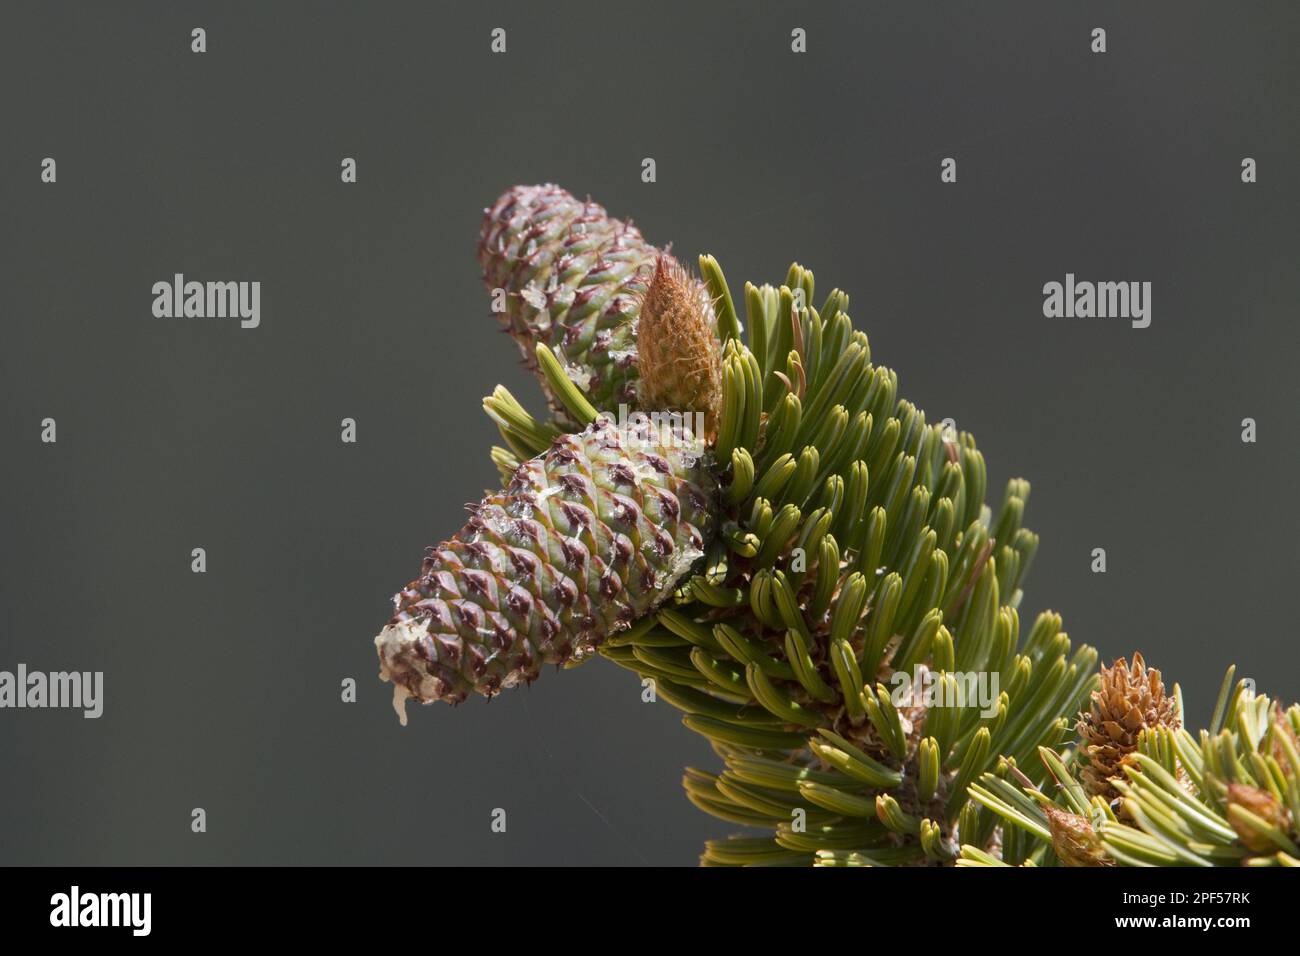 Great basin bristlecone pine (Pinus longaeva), Longleaf pine, Western pine, Pine family, Ancient bristlecone pine close-up of cone Stock Photo